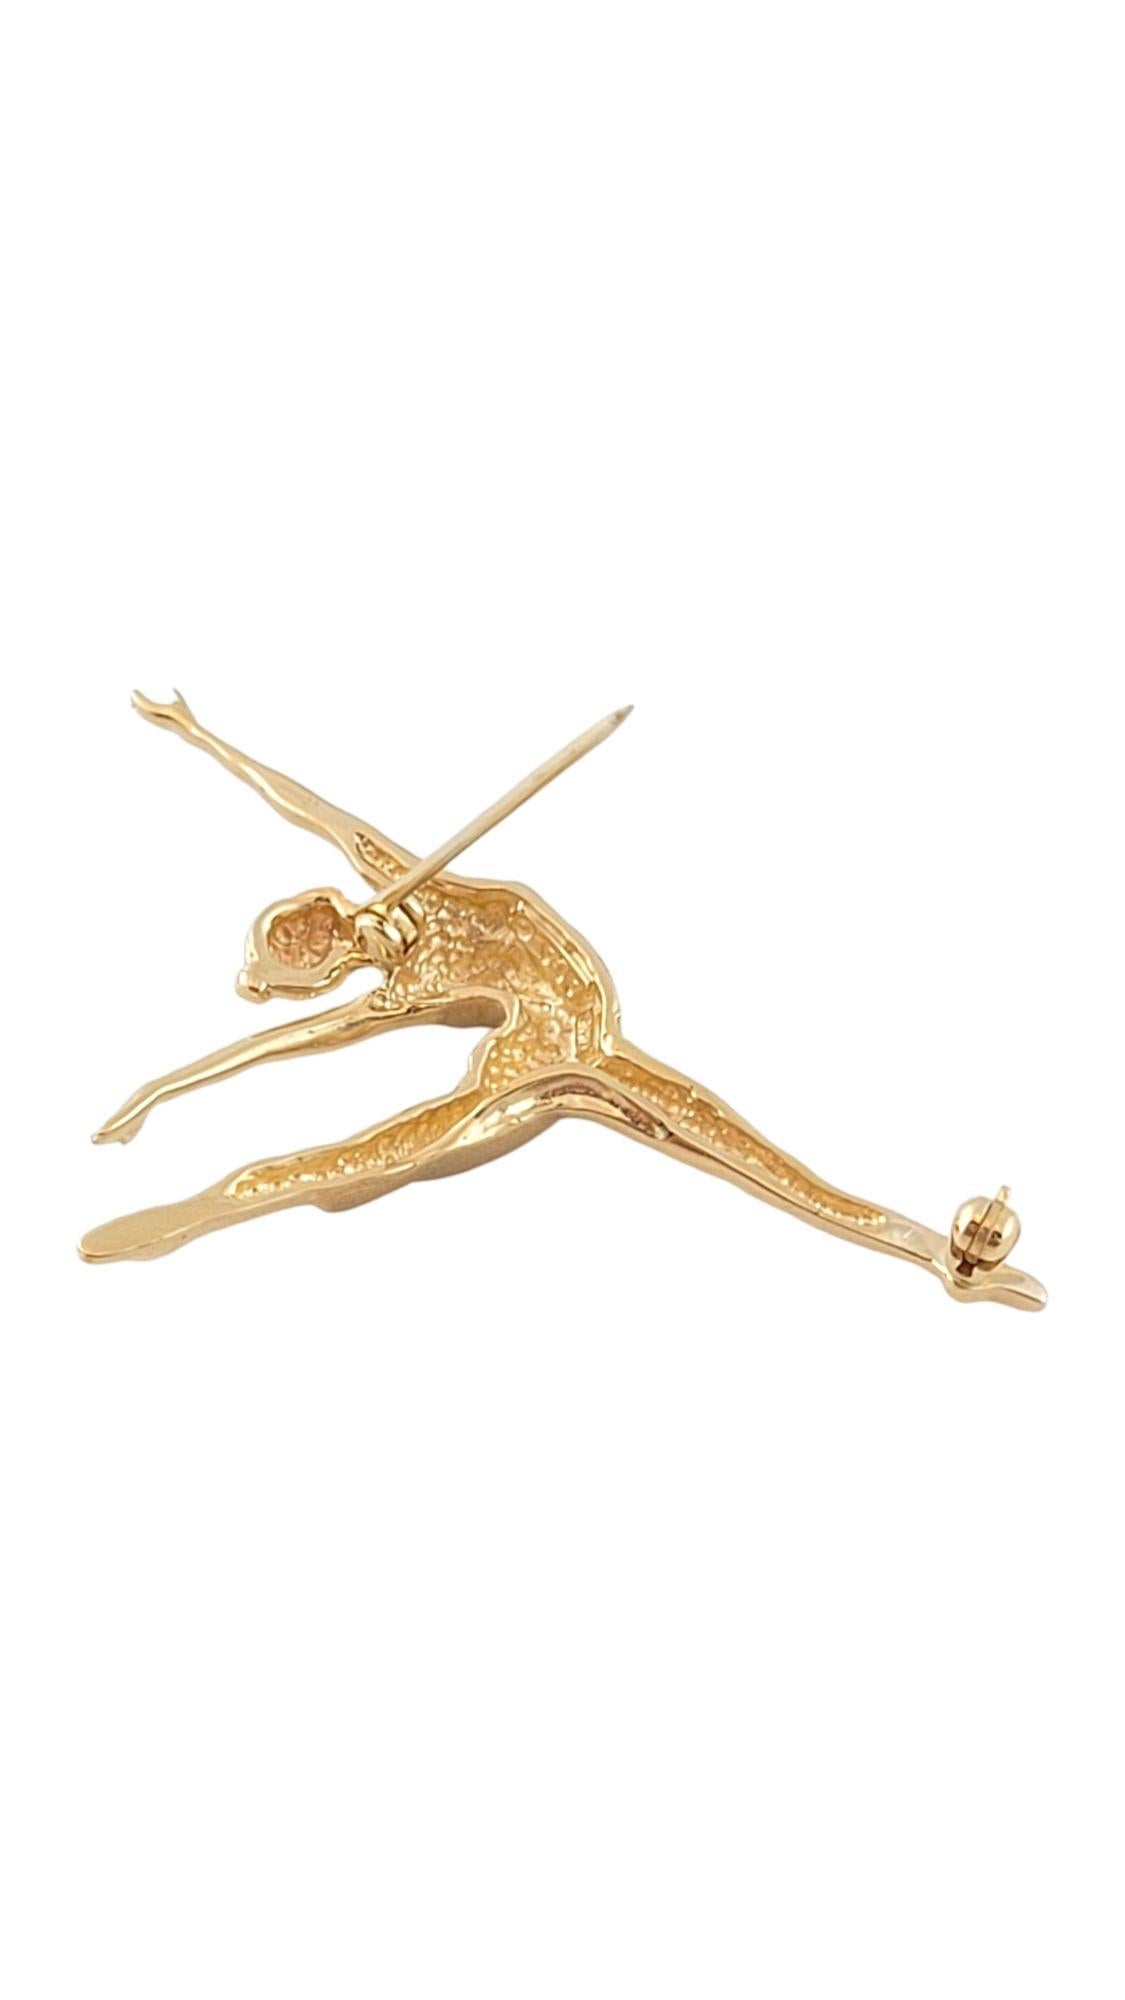 14K Yellow Gold Ballerina Dancer Pin #14627 For Sale 1